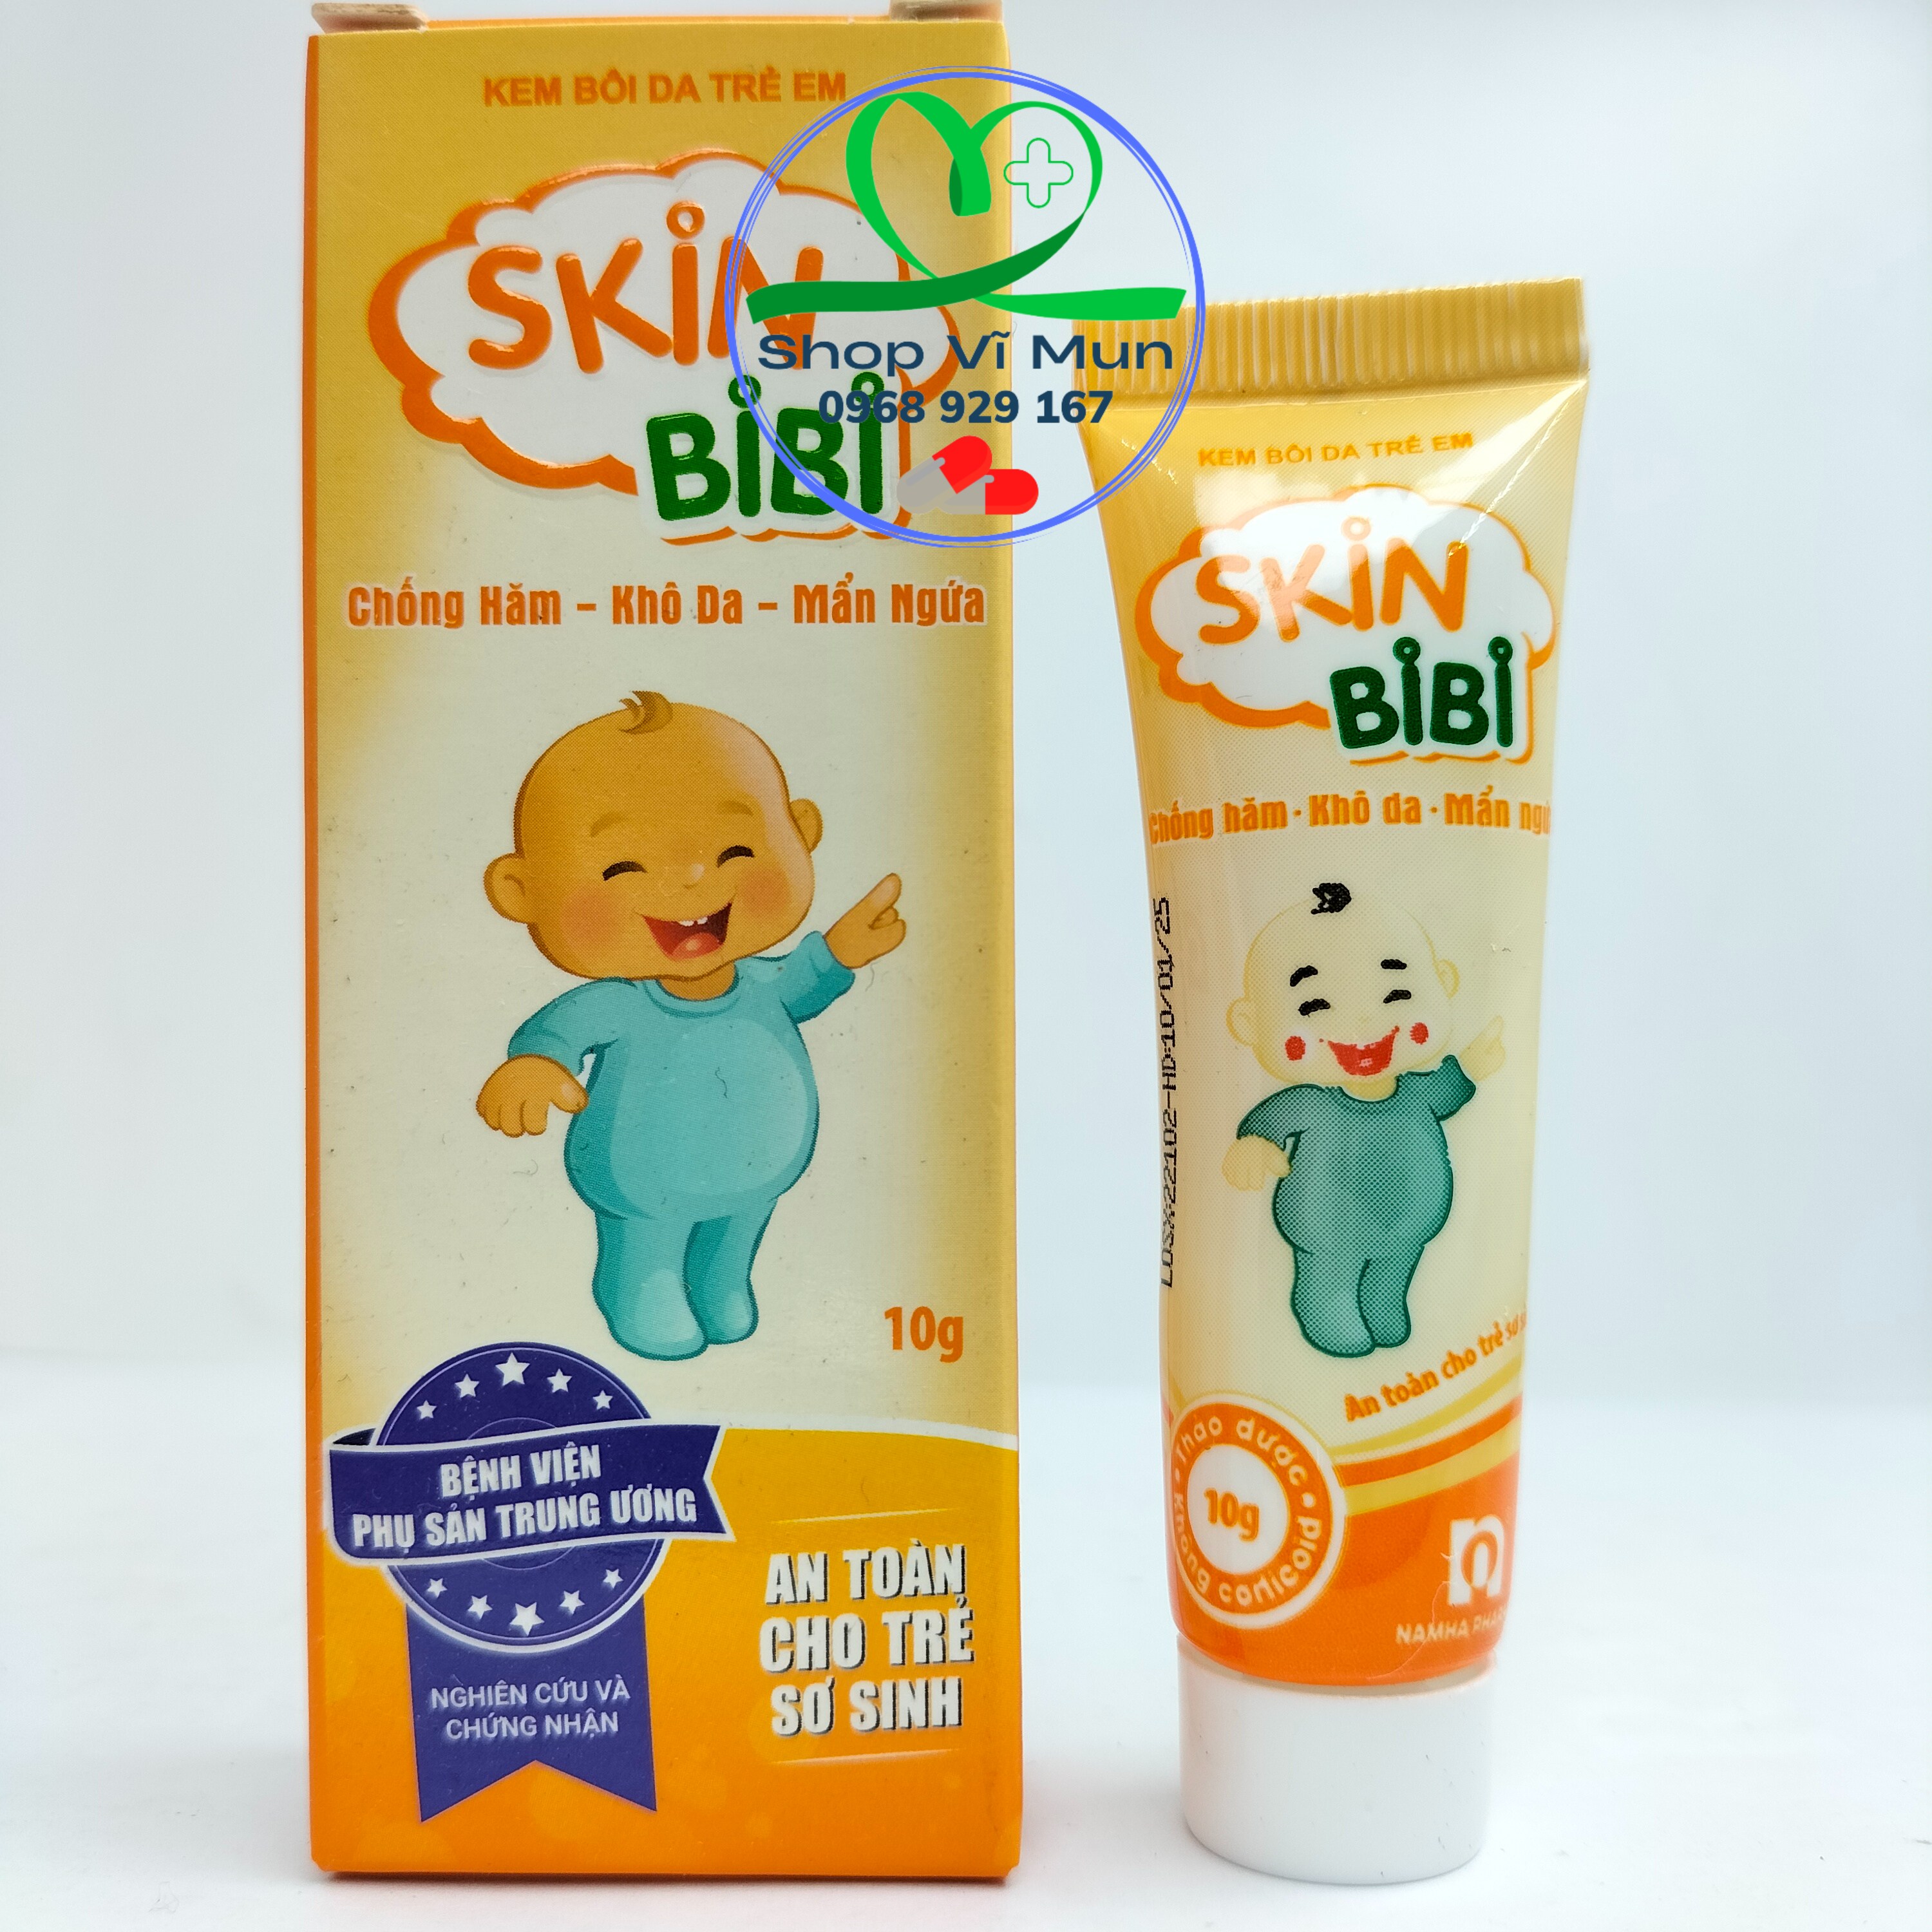 Kem bôi da trẻ em Skin Bibi chống hăm khô da mẩn ngứa 10g